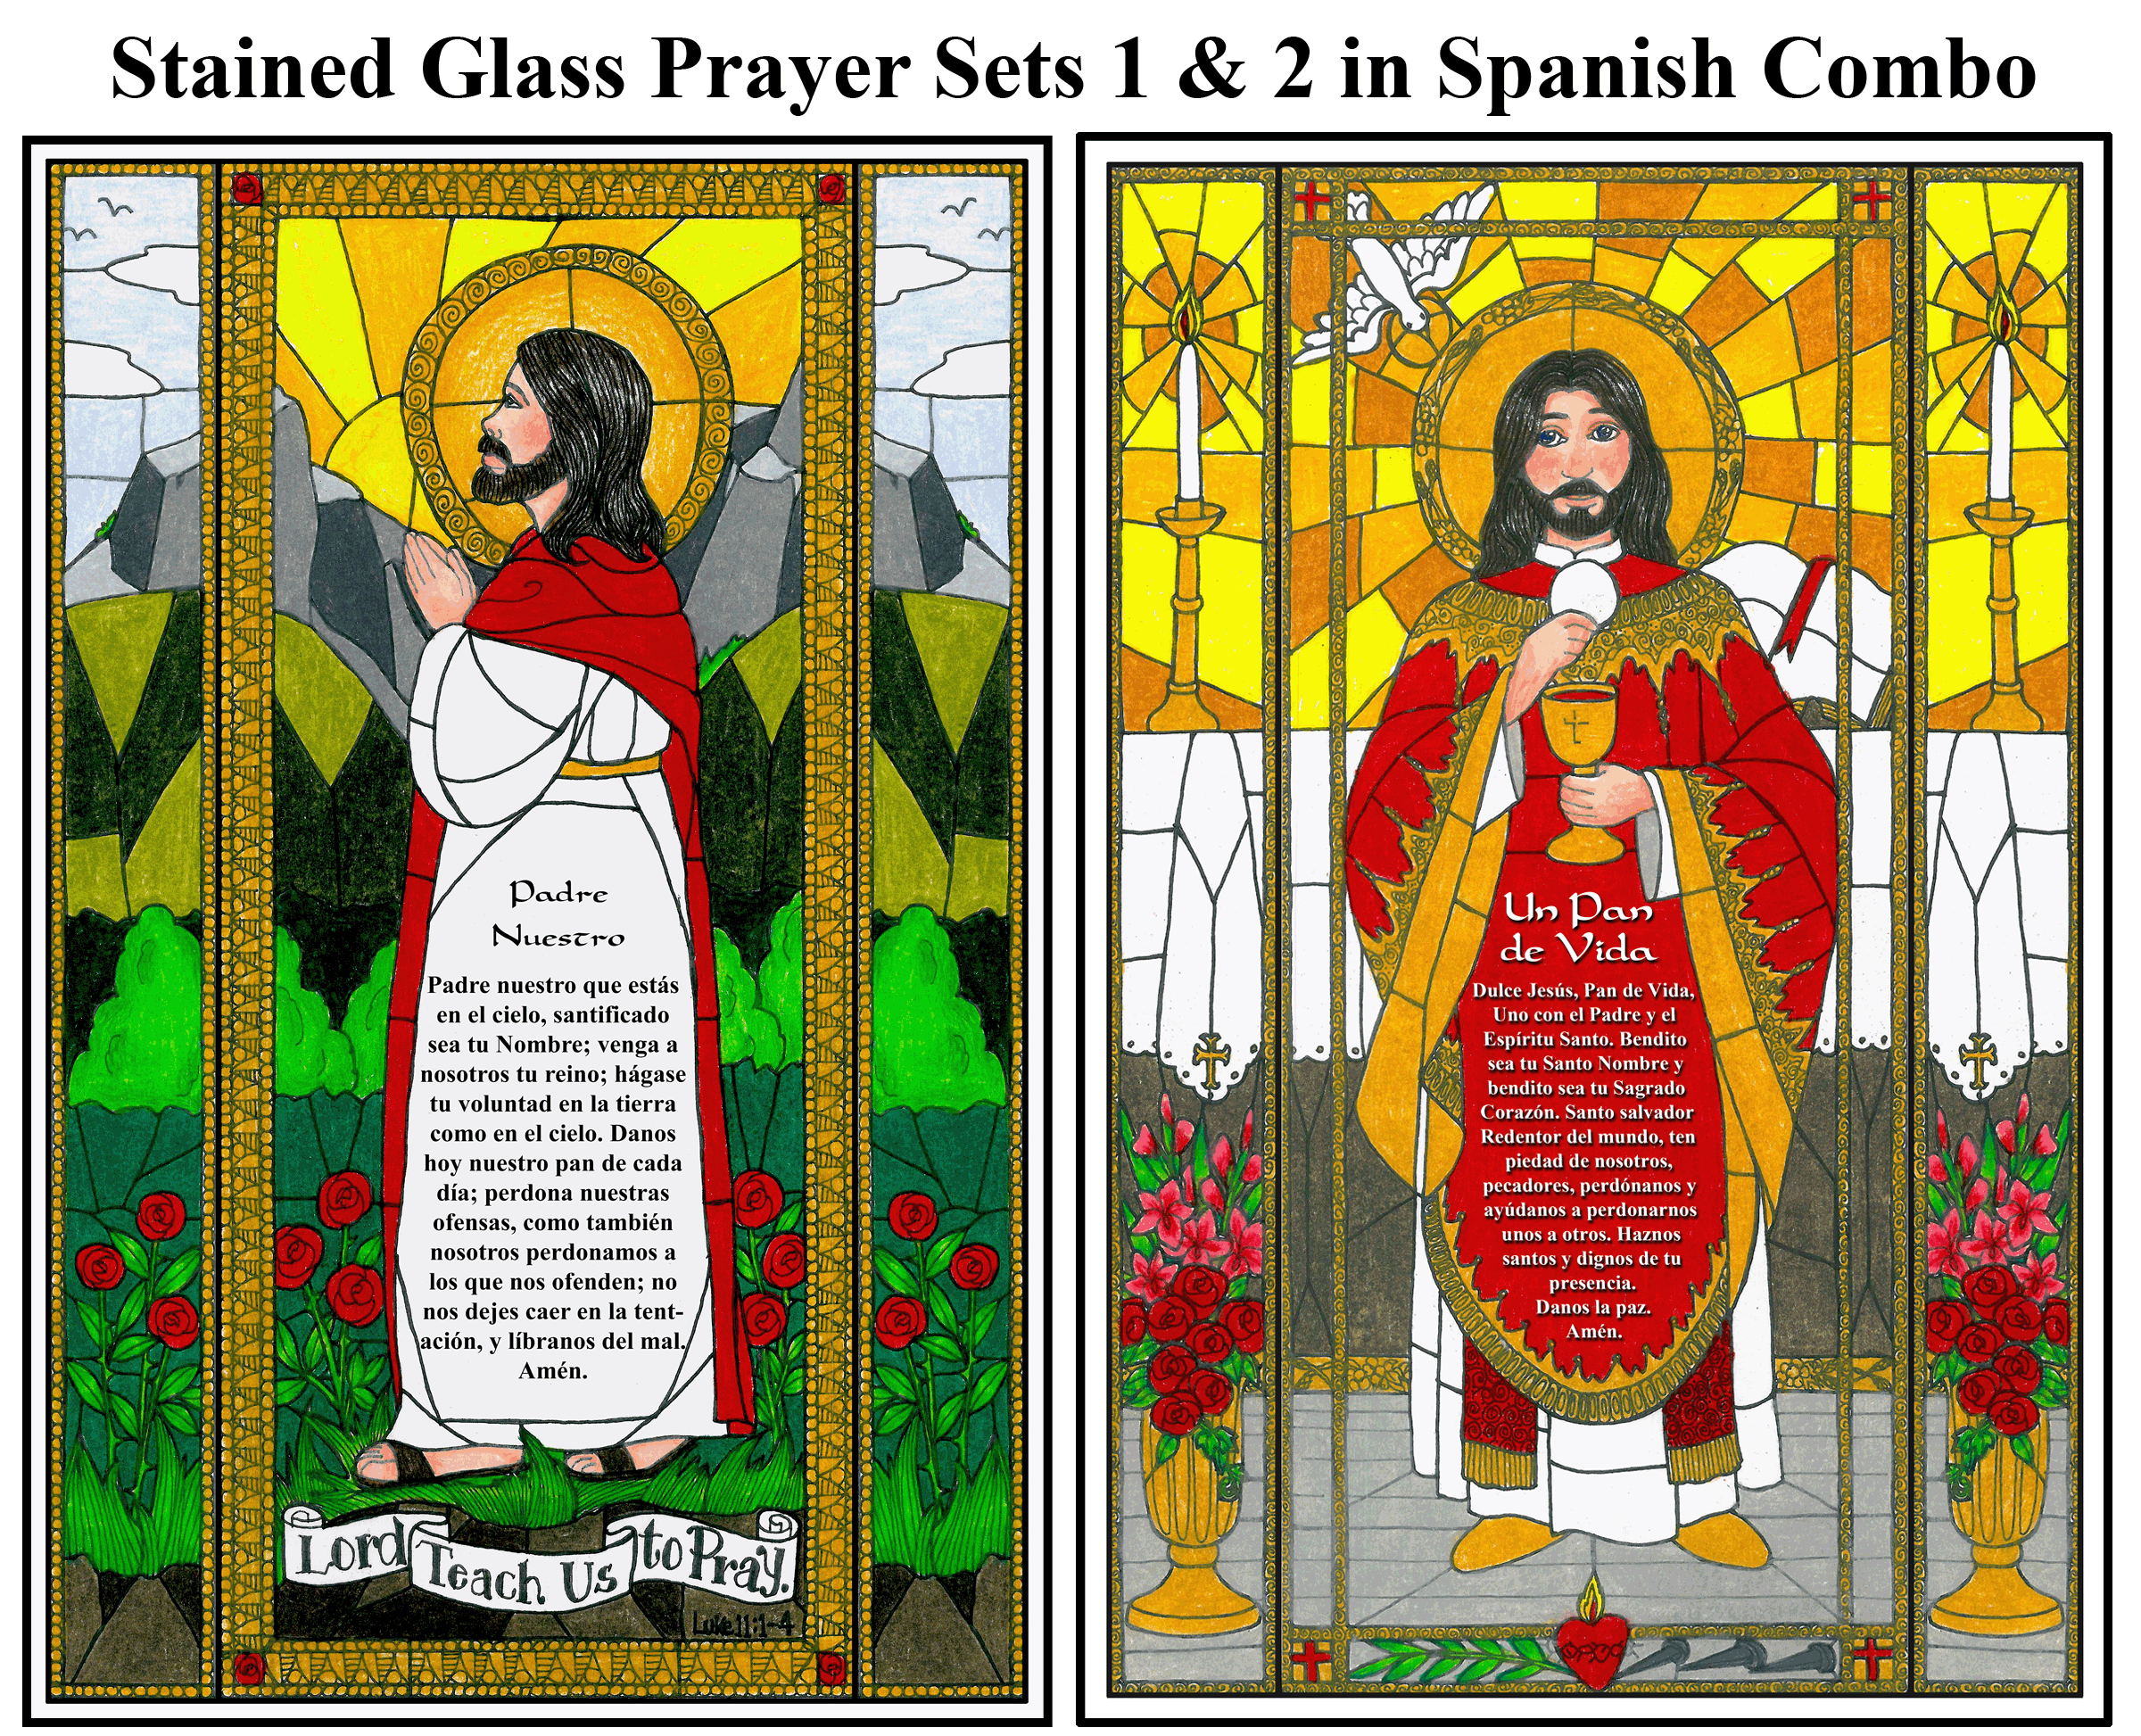 Stained Glass Prayer Set 1 & 2 - Spanish Combo